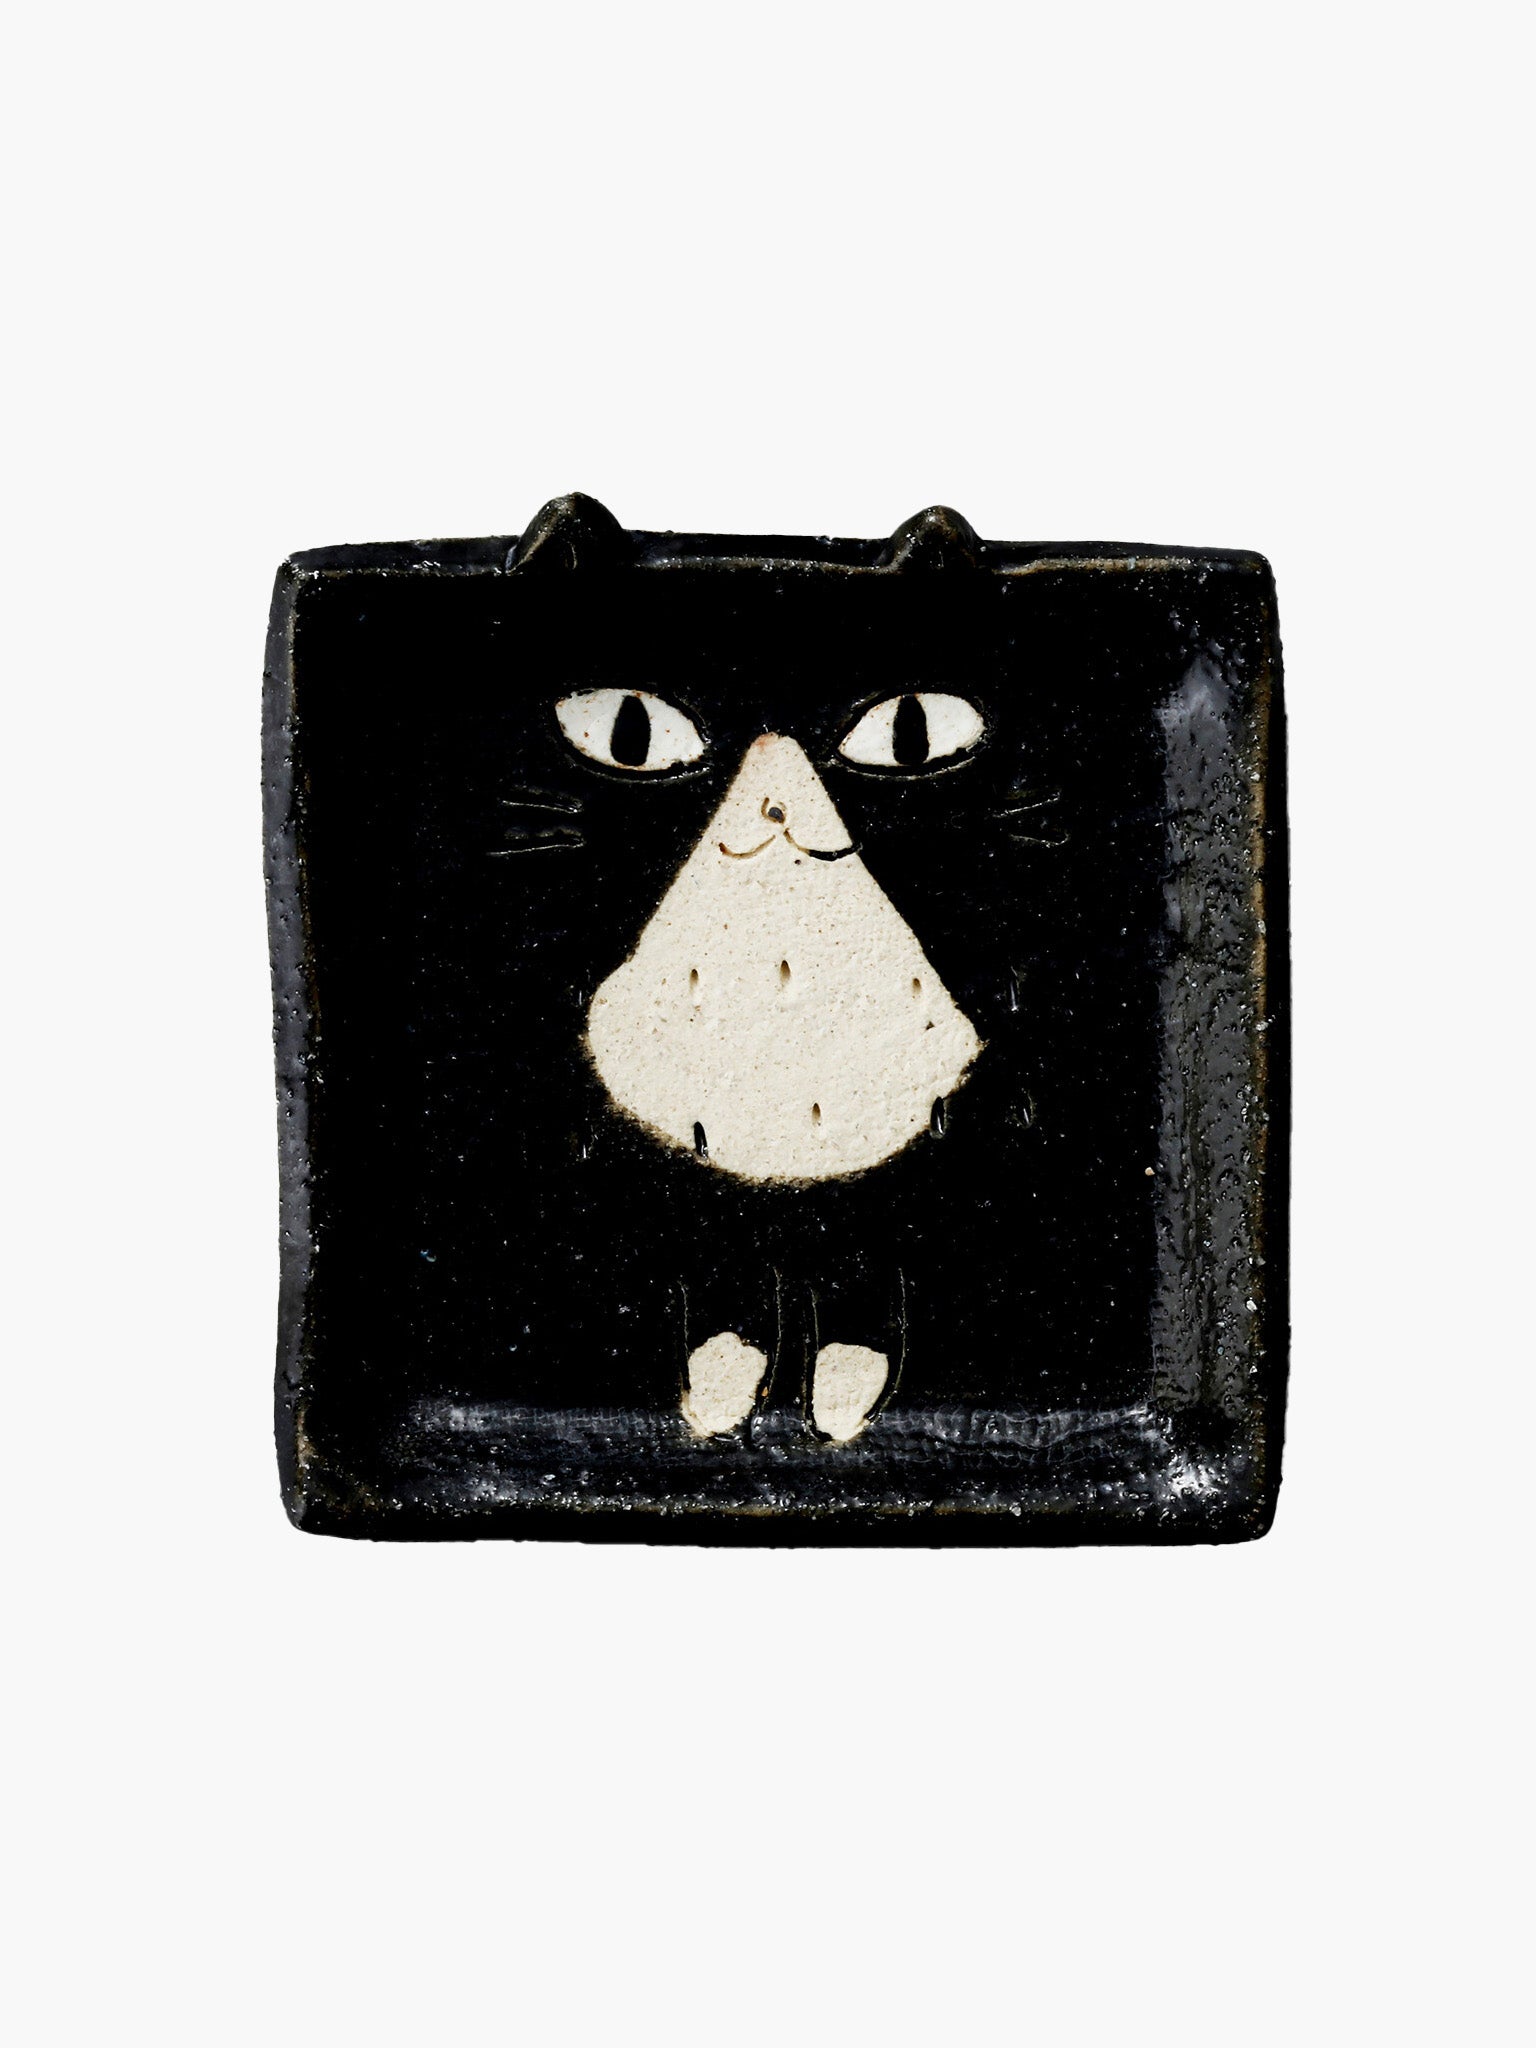 Black Cat Square Plate